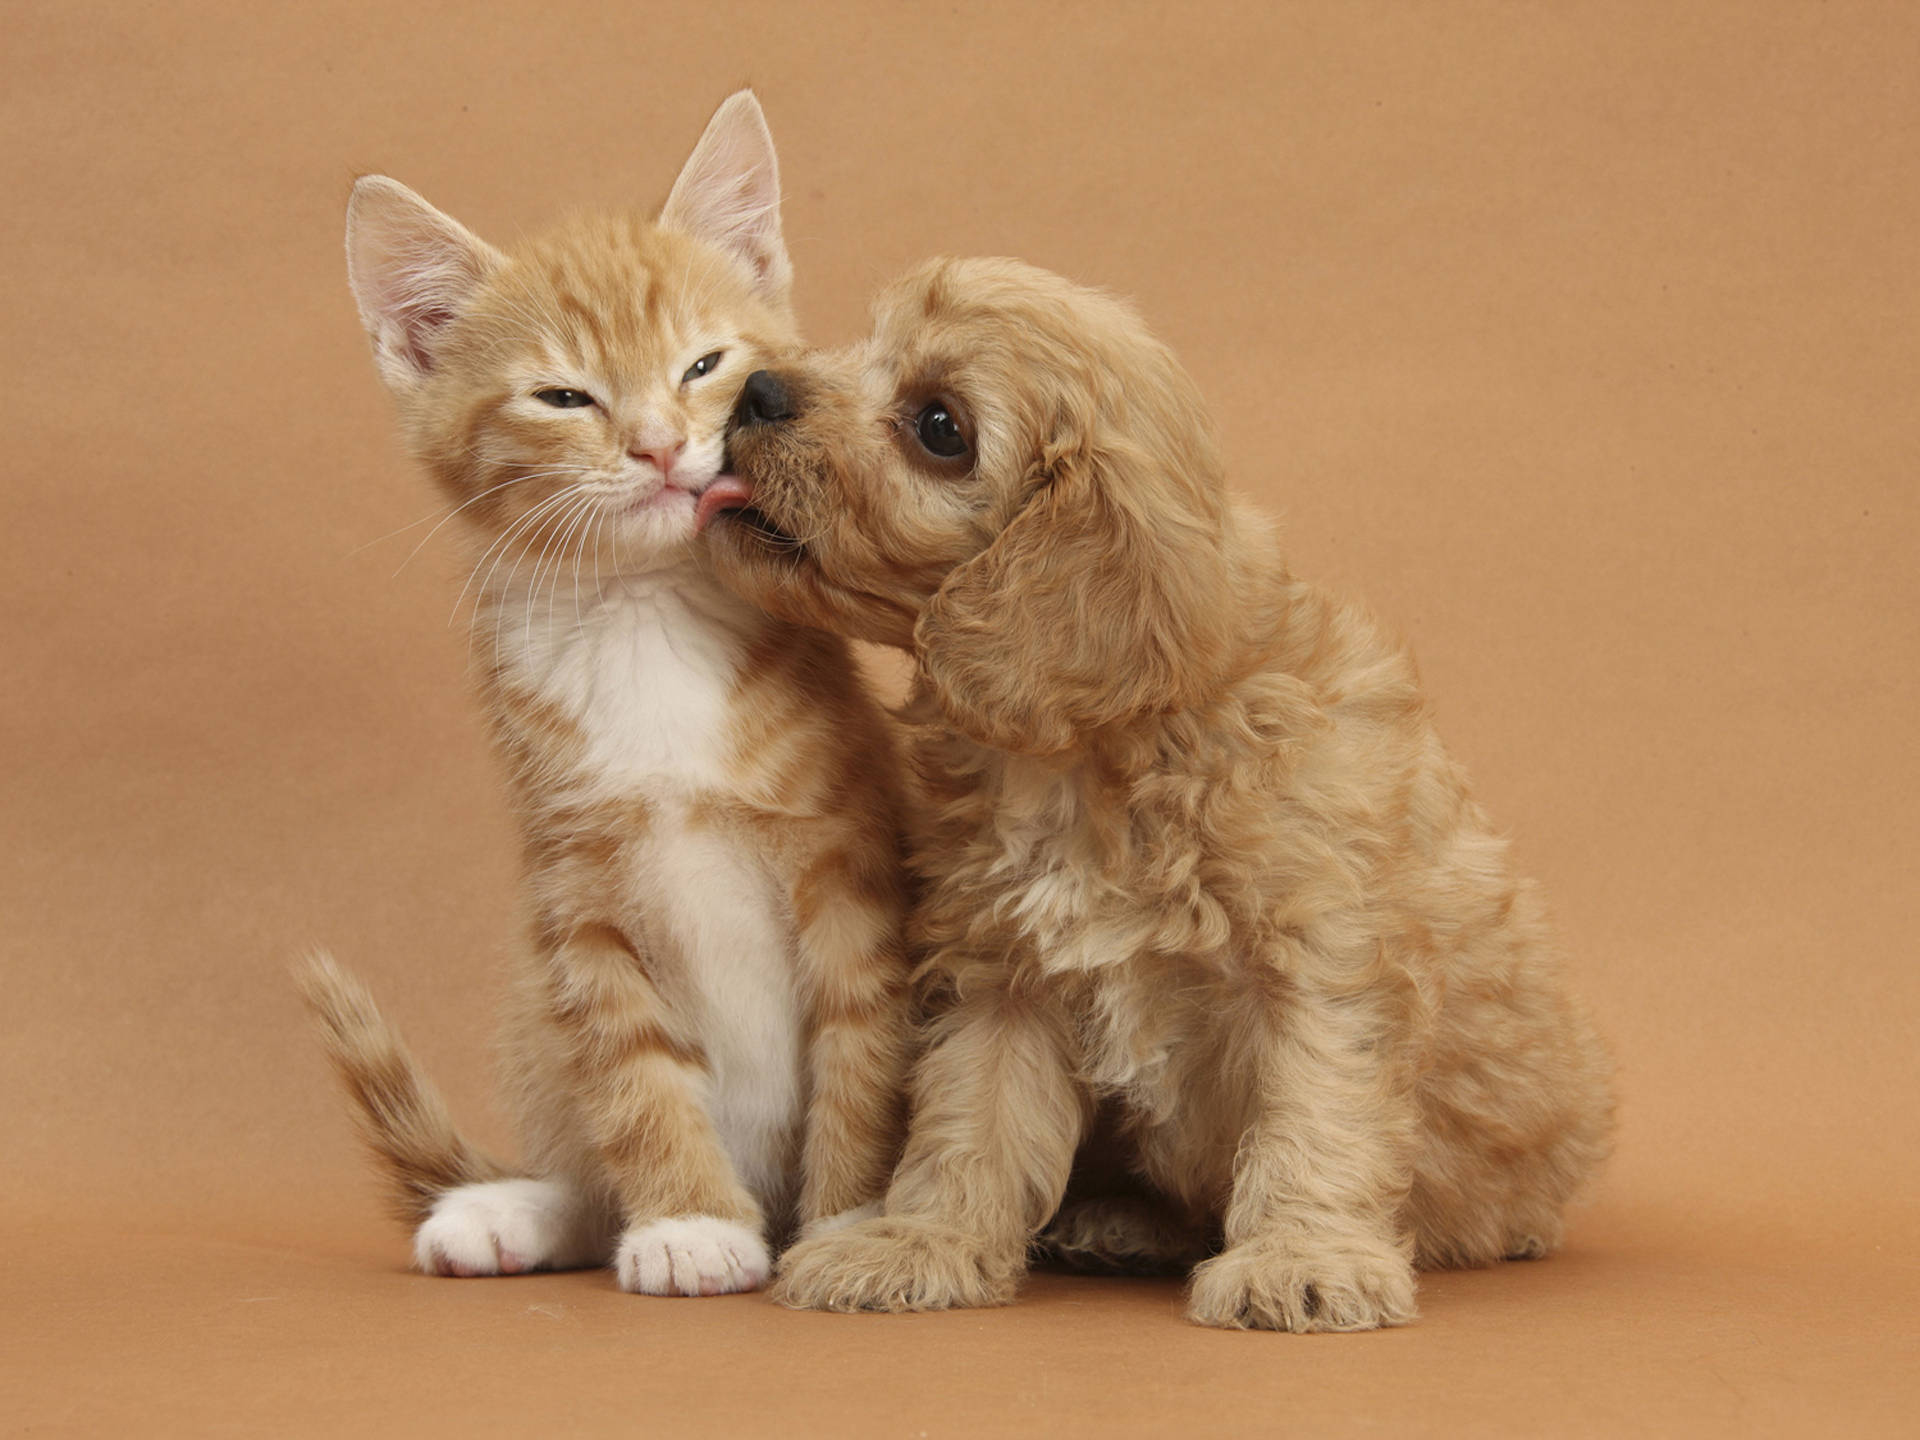 Dog Licking Cat Image